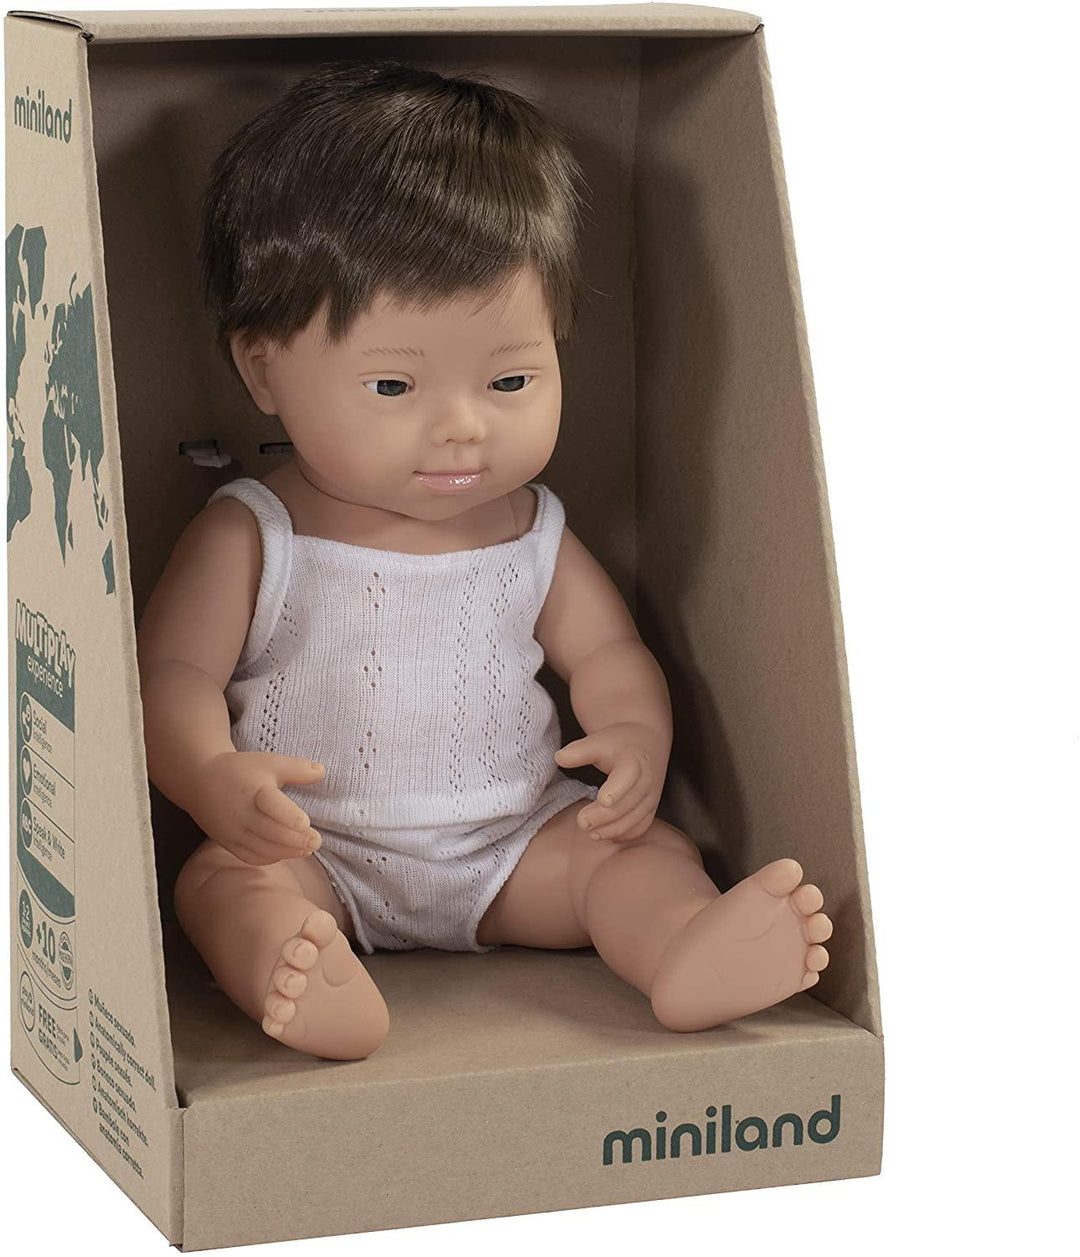 Miniland Doll - Caucasian Boy - Down Syndrome - 38cm